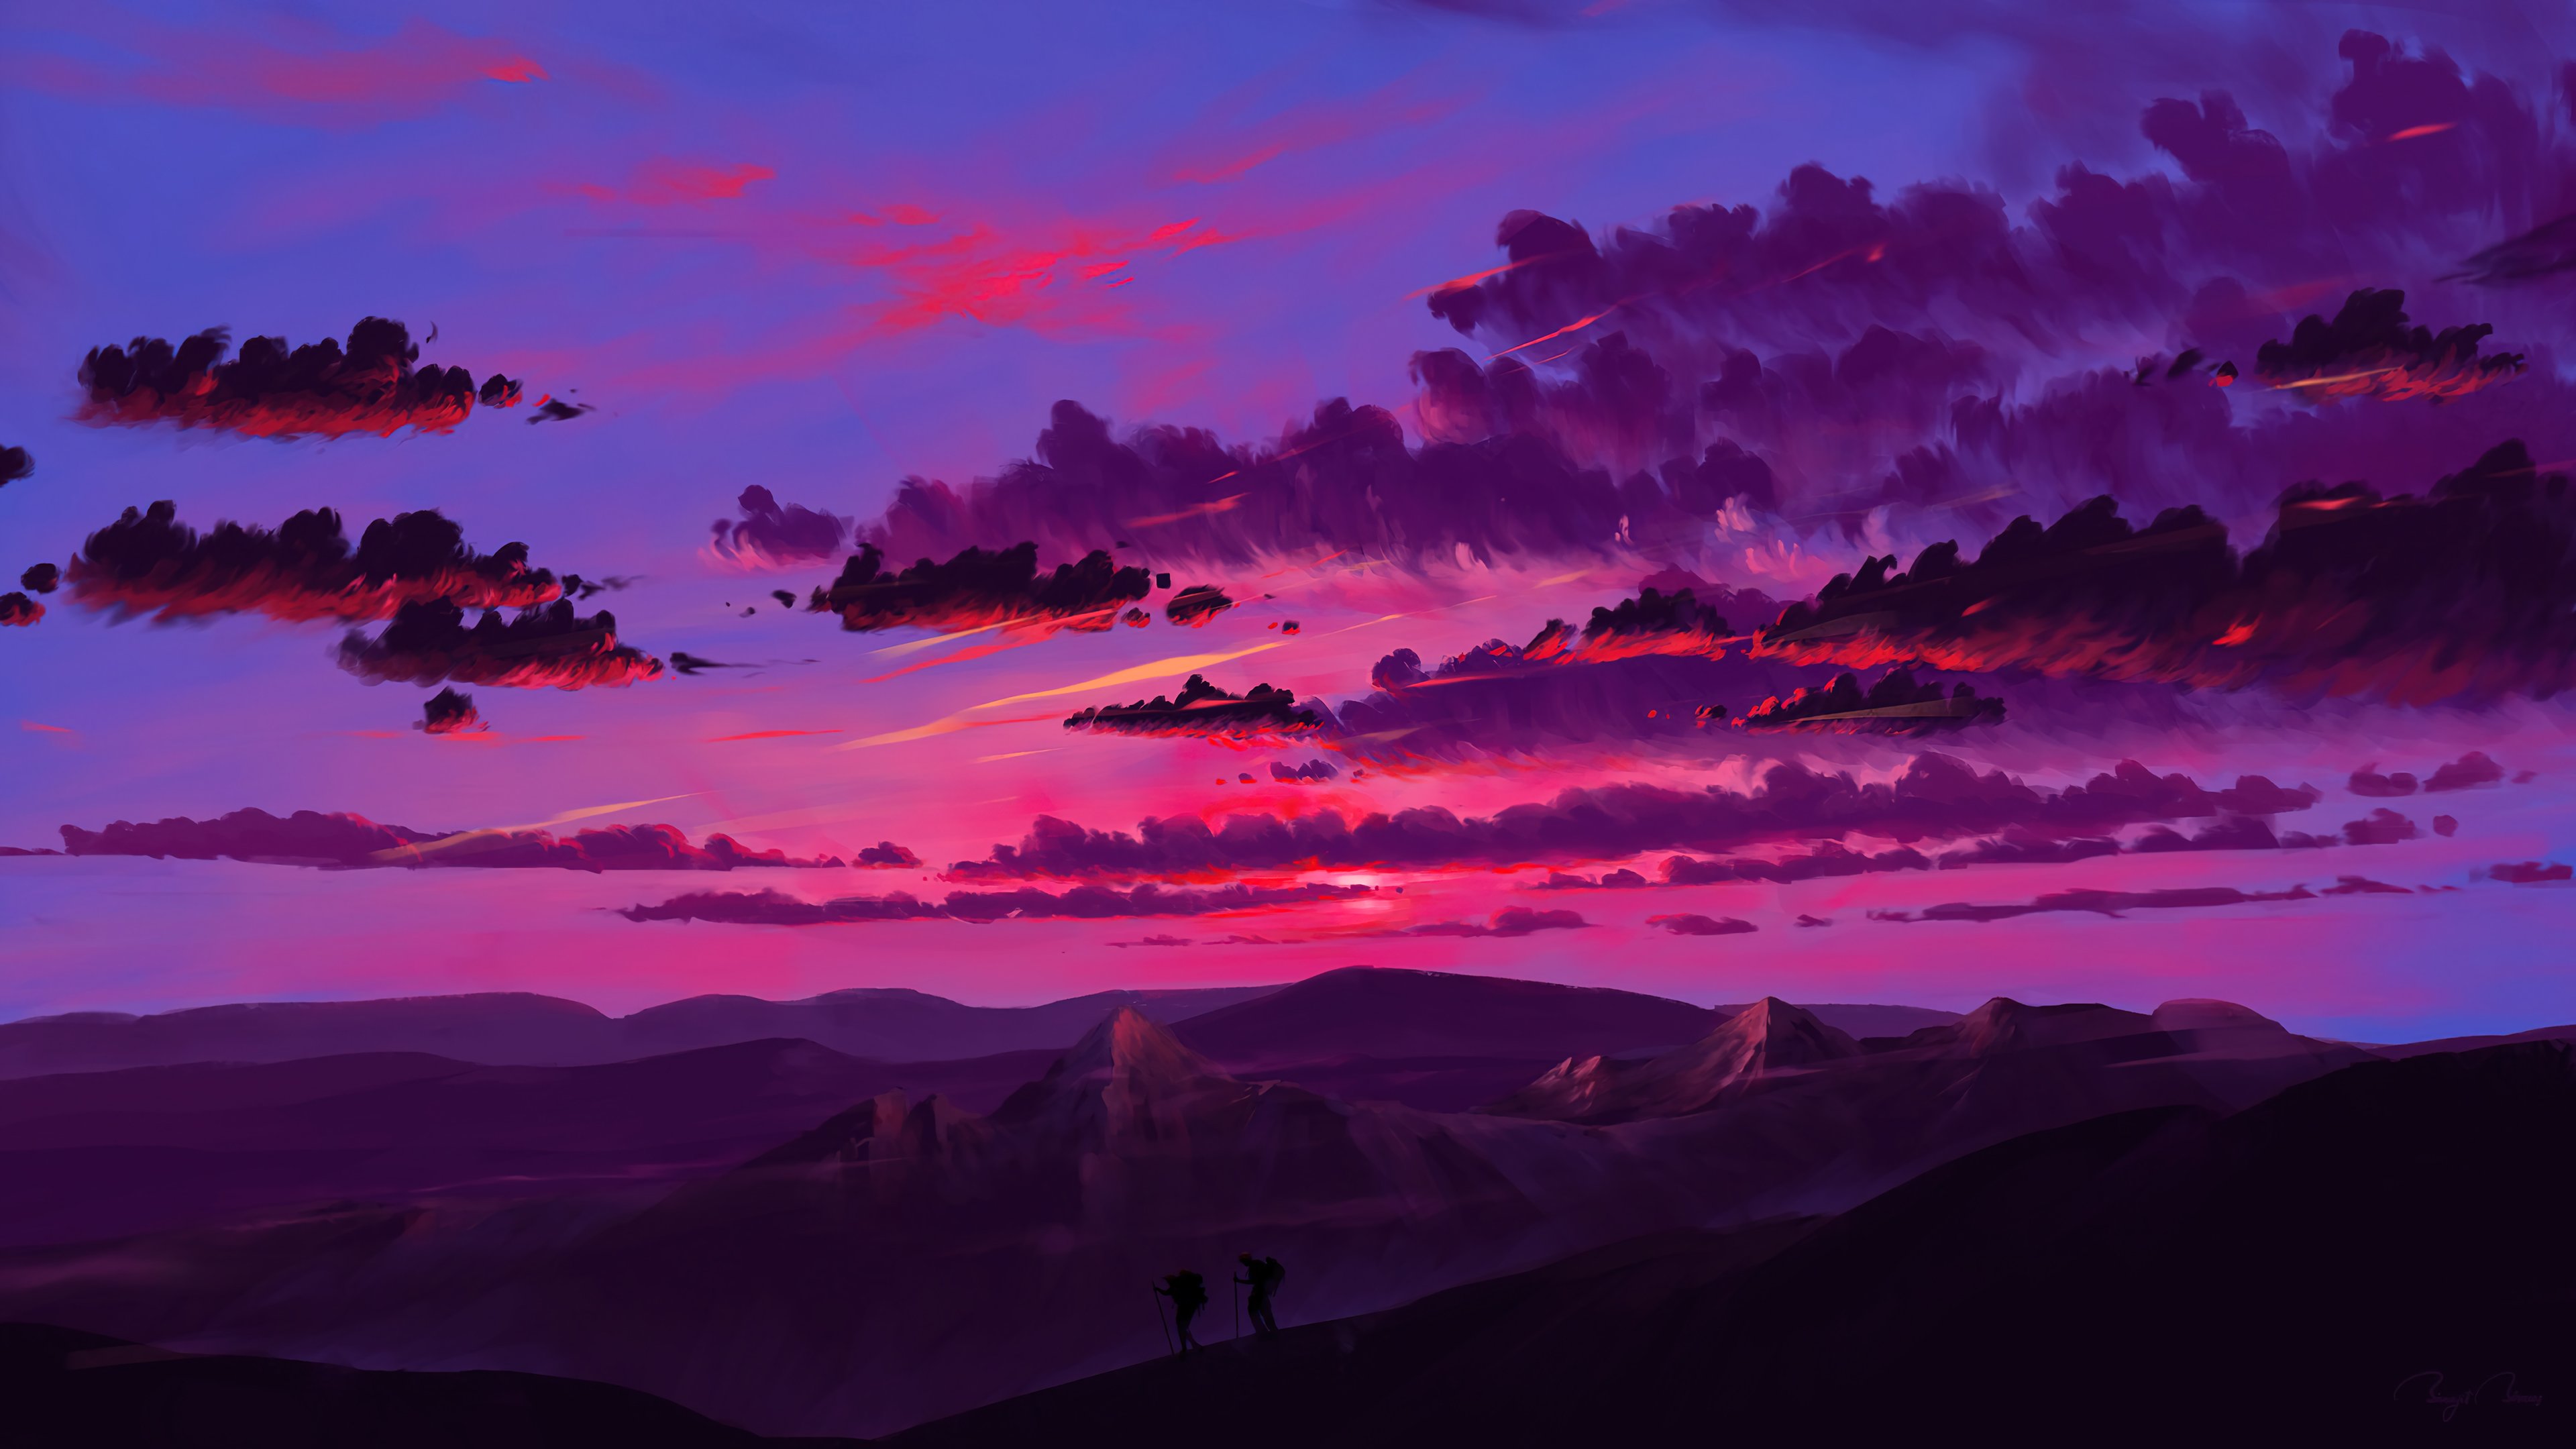 Pink Sunset Digital Art Wallpaper 4K Hd Id:7316